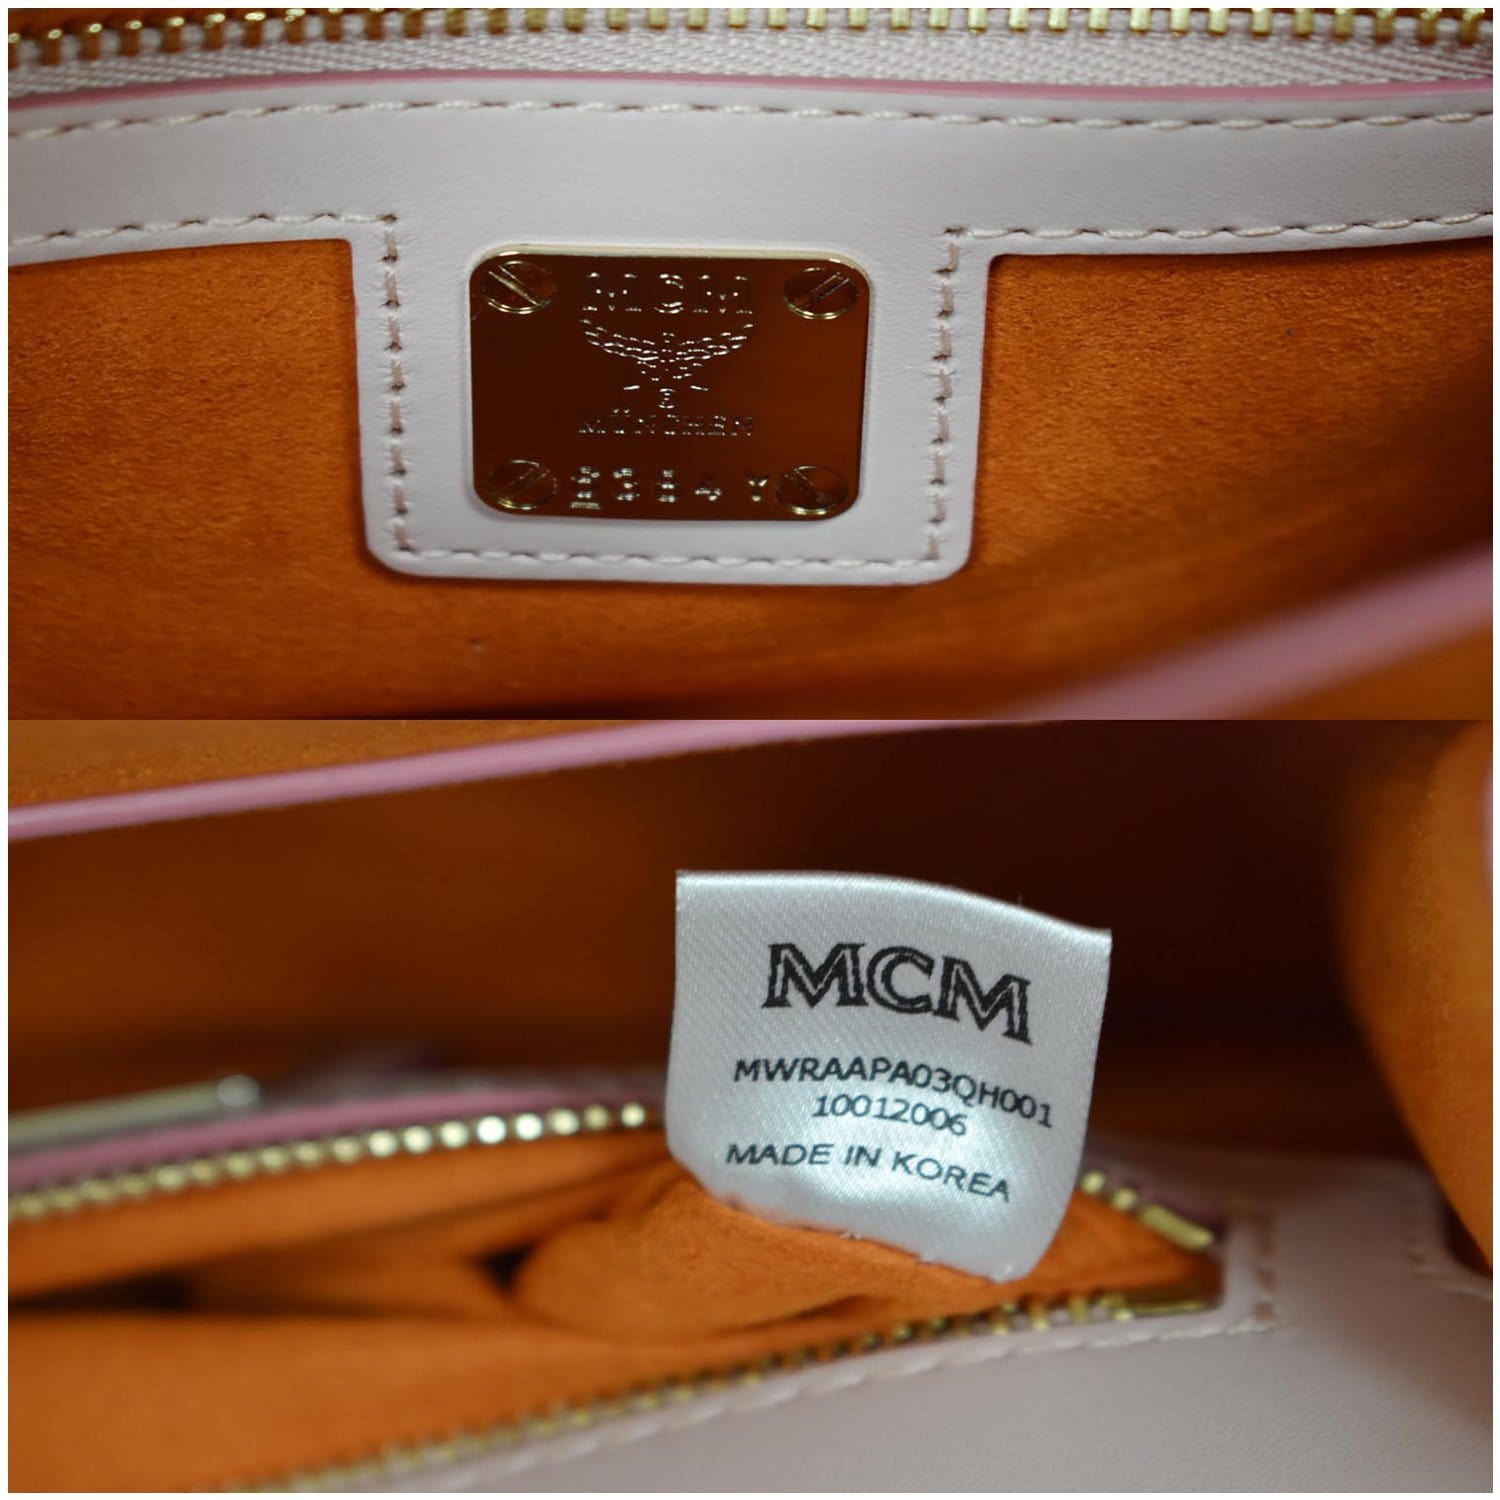 MCM Patricia Visetos Mini Backpack